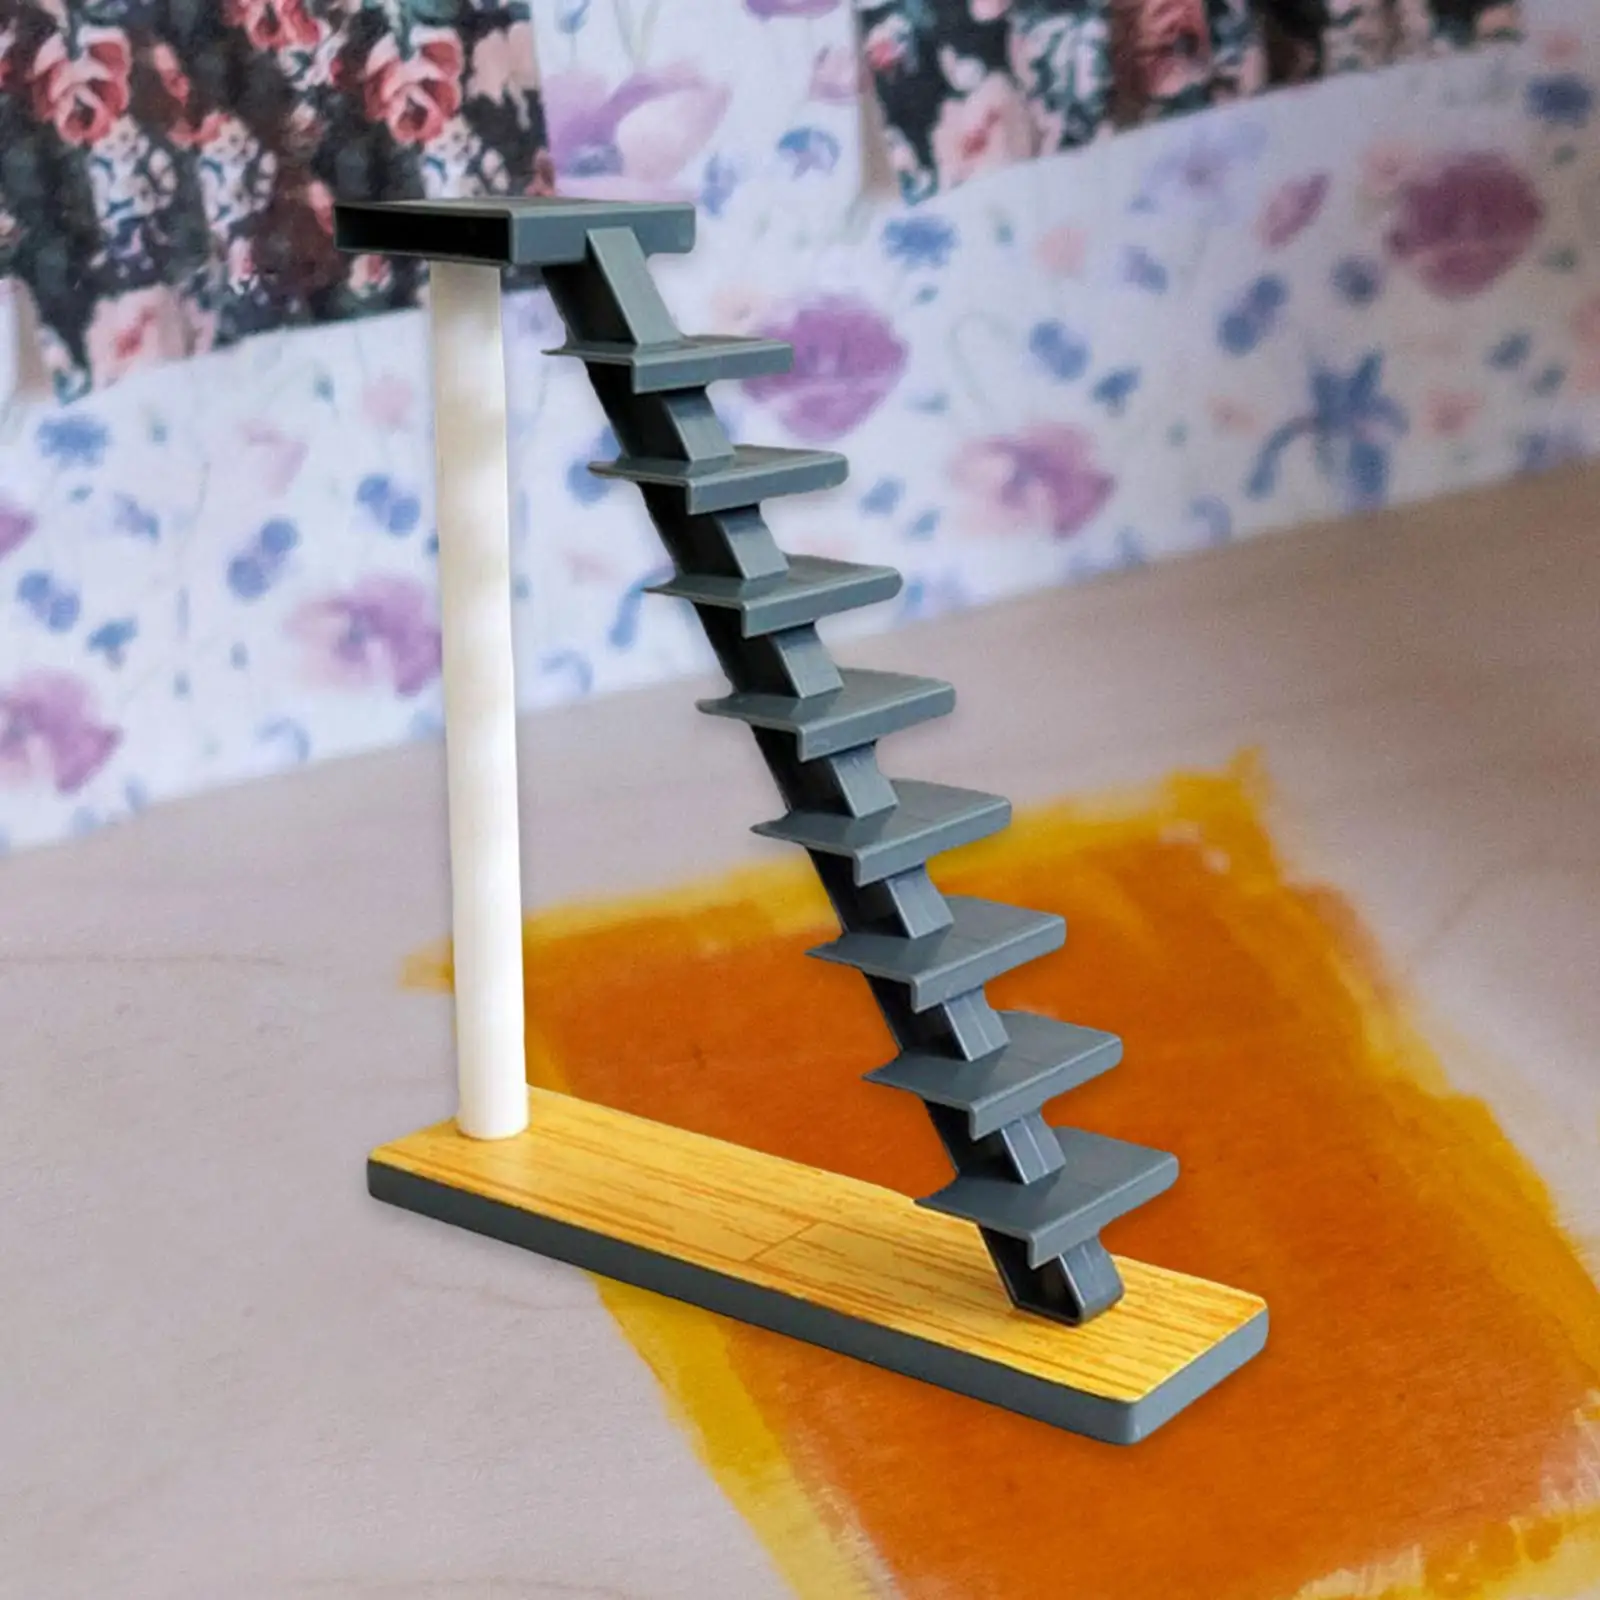 1/12 Dollhouse Furniture Stairs Model Wood Accessories Simulation Decor DIY Scene Props Retro Style Micro Landscape Life Scene